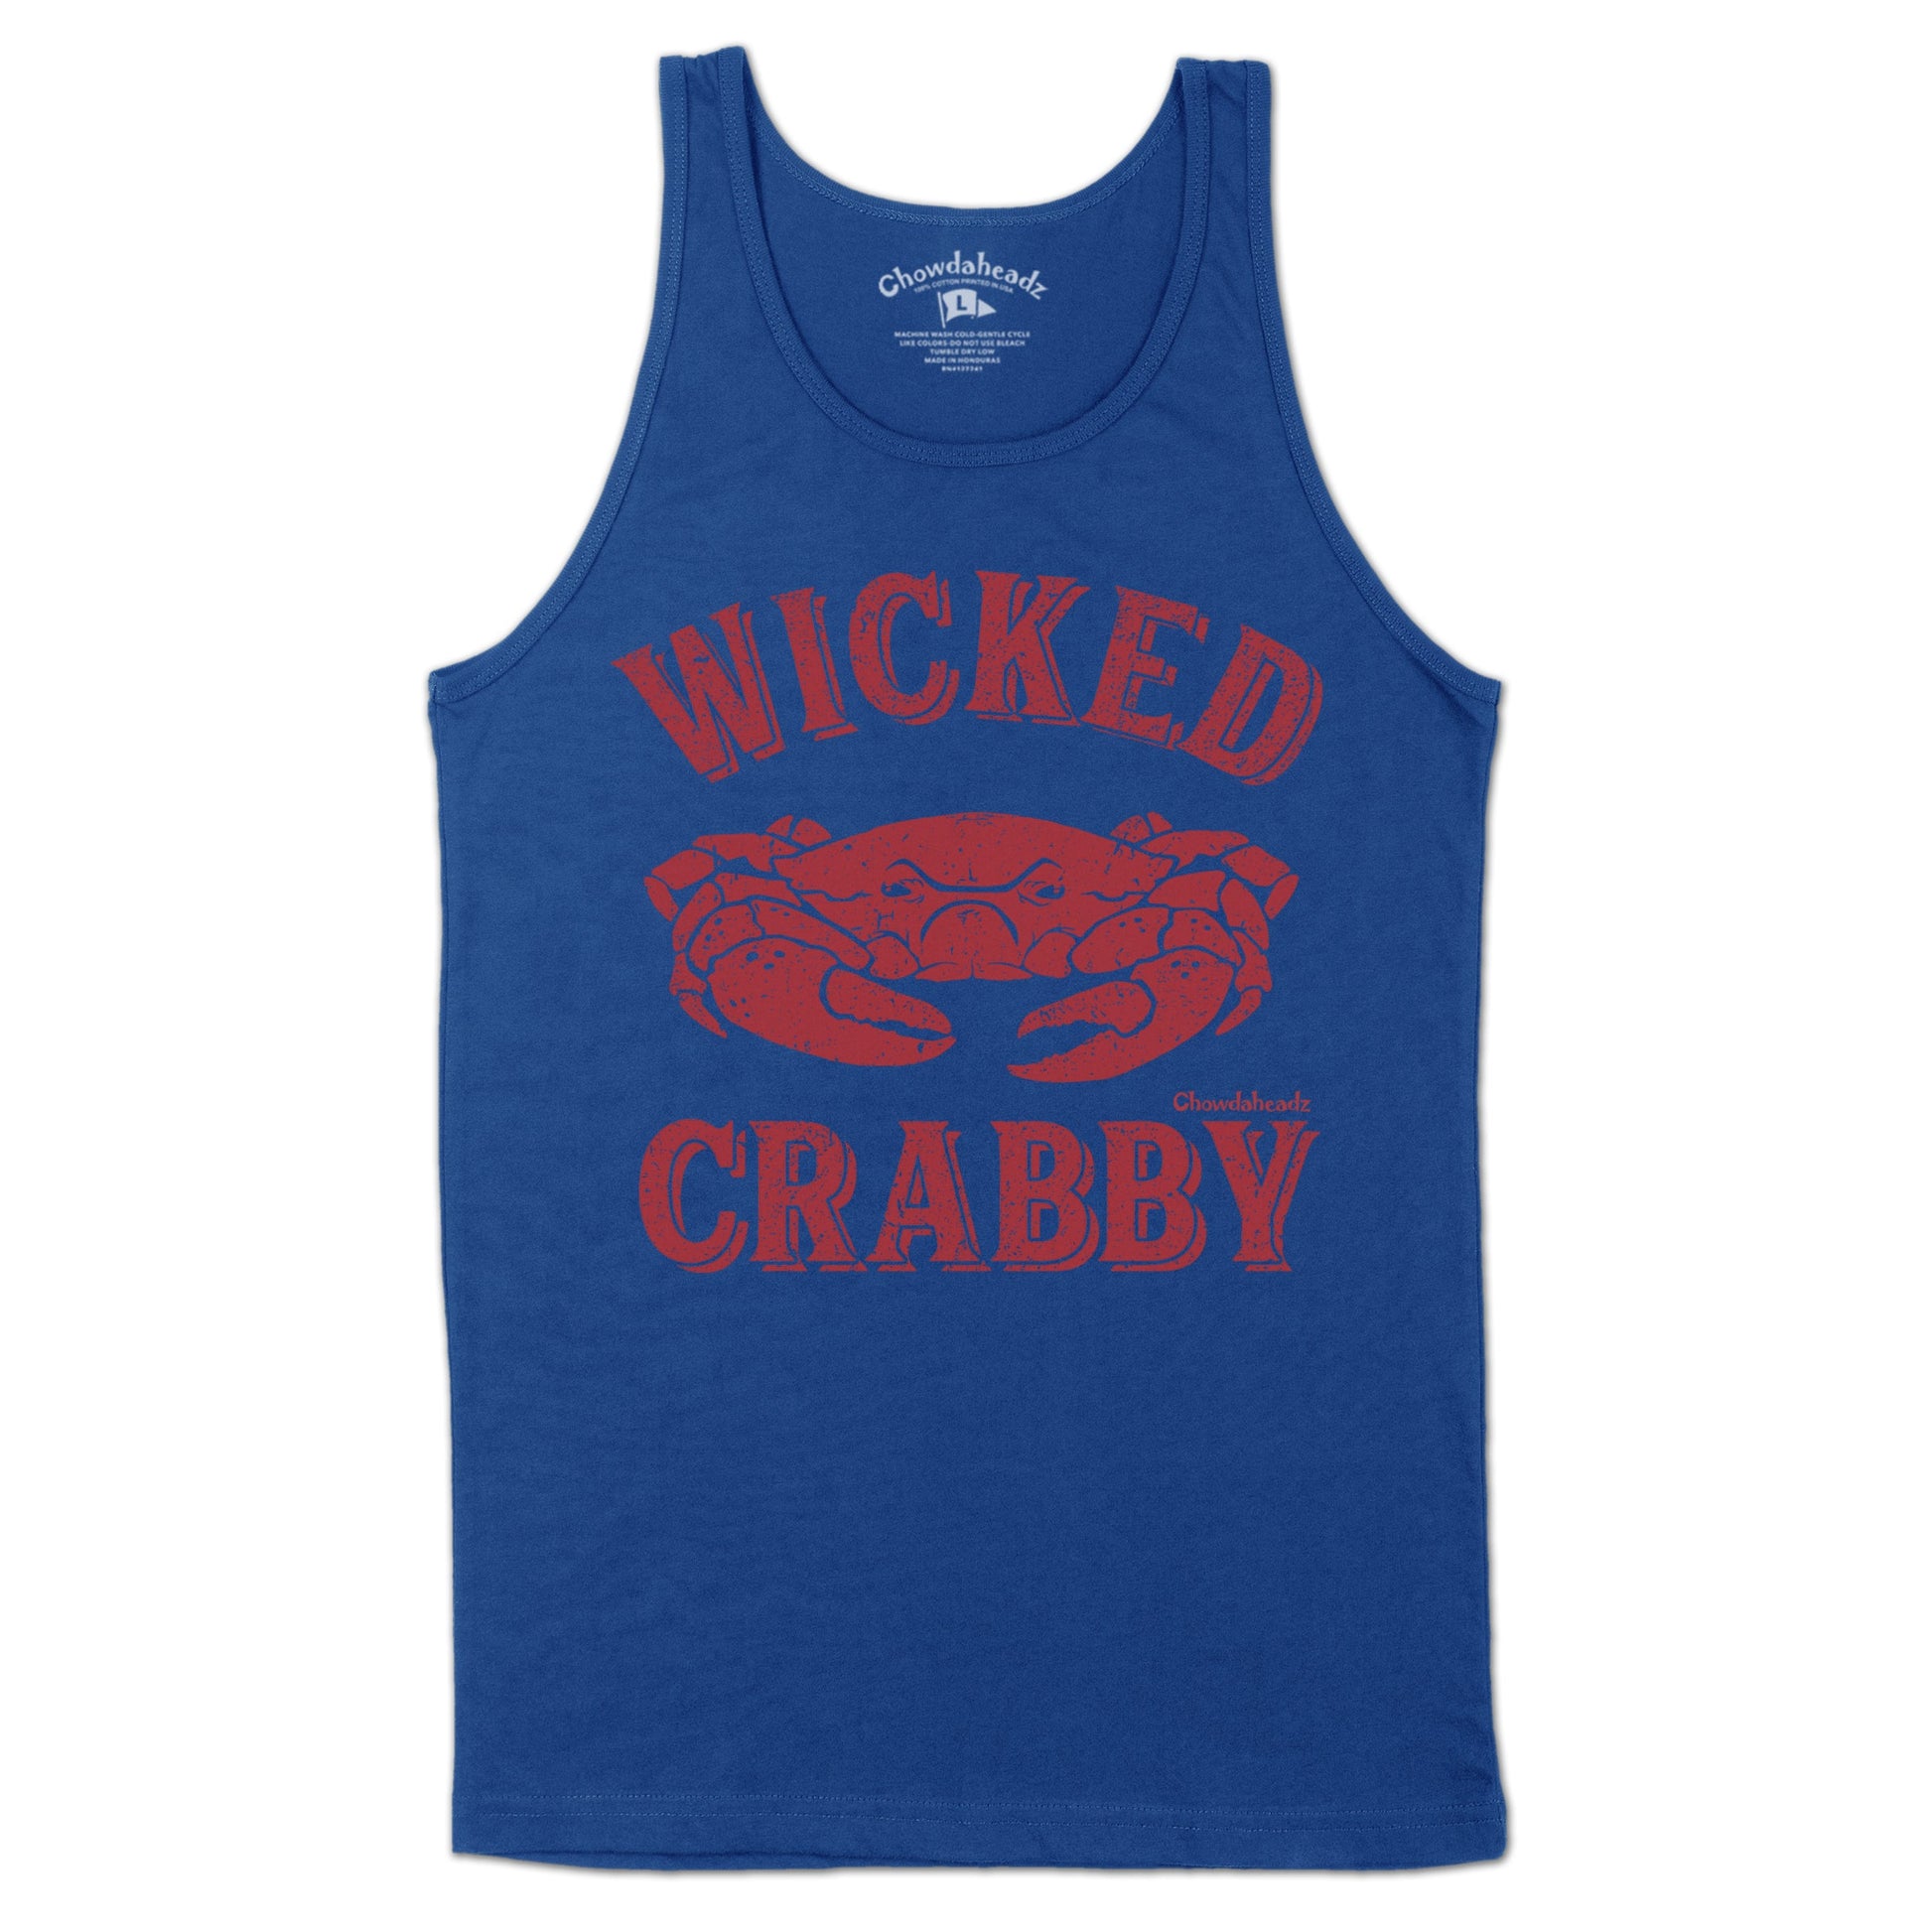 Wicked Crabby Men's Tank Top - Chowdaheadz